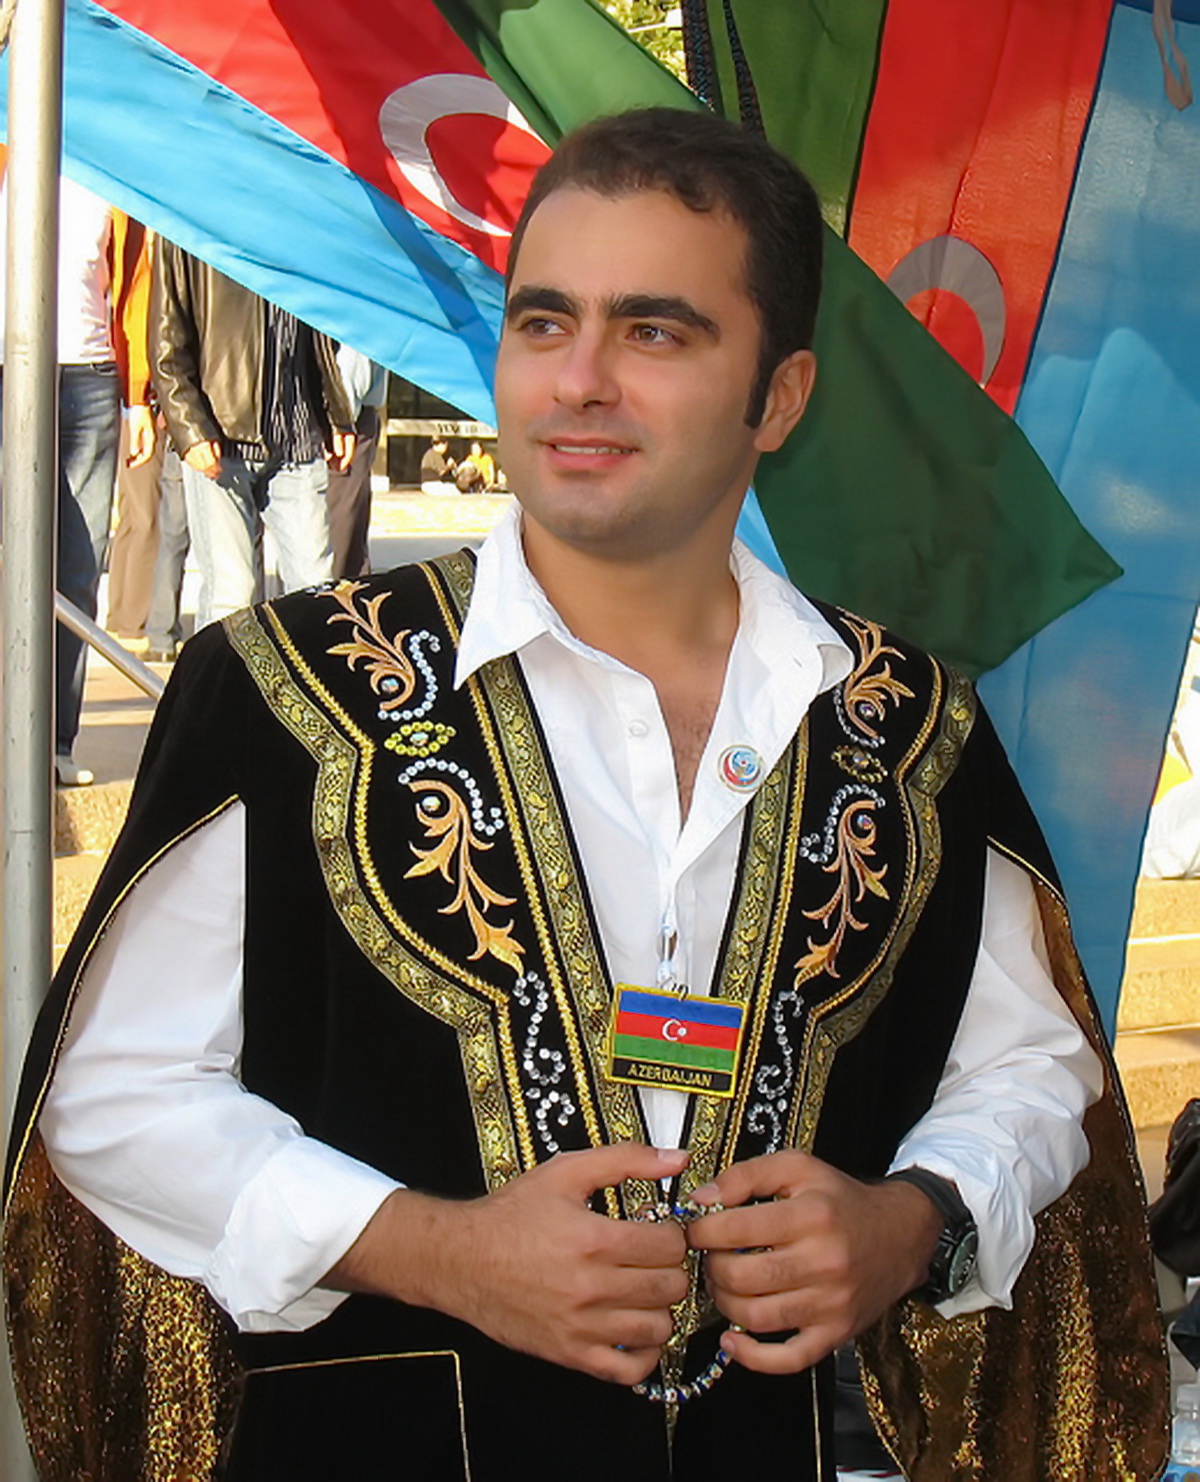 Как выглядят азеры. Азейбарджан национальный костюм. Национальный костюм Азербайджана Новруз. Азербайджан азербайджанский национальный мужской костюм. Азейбарджан Талыши.